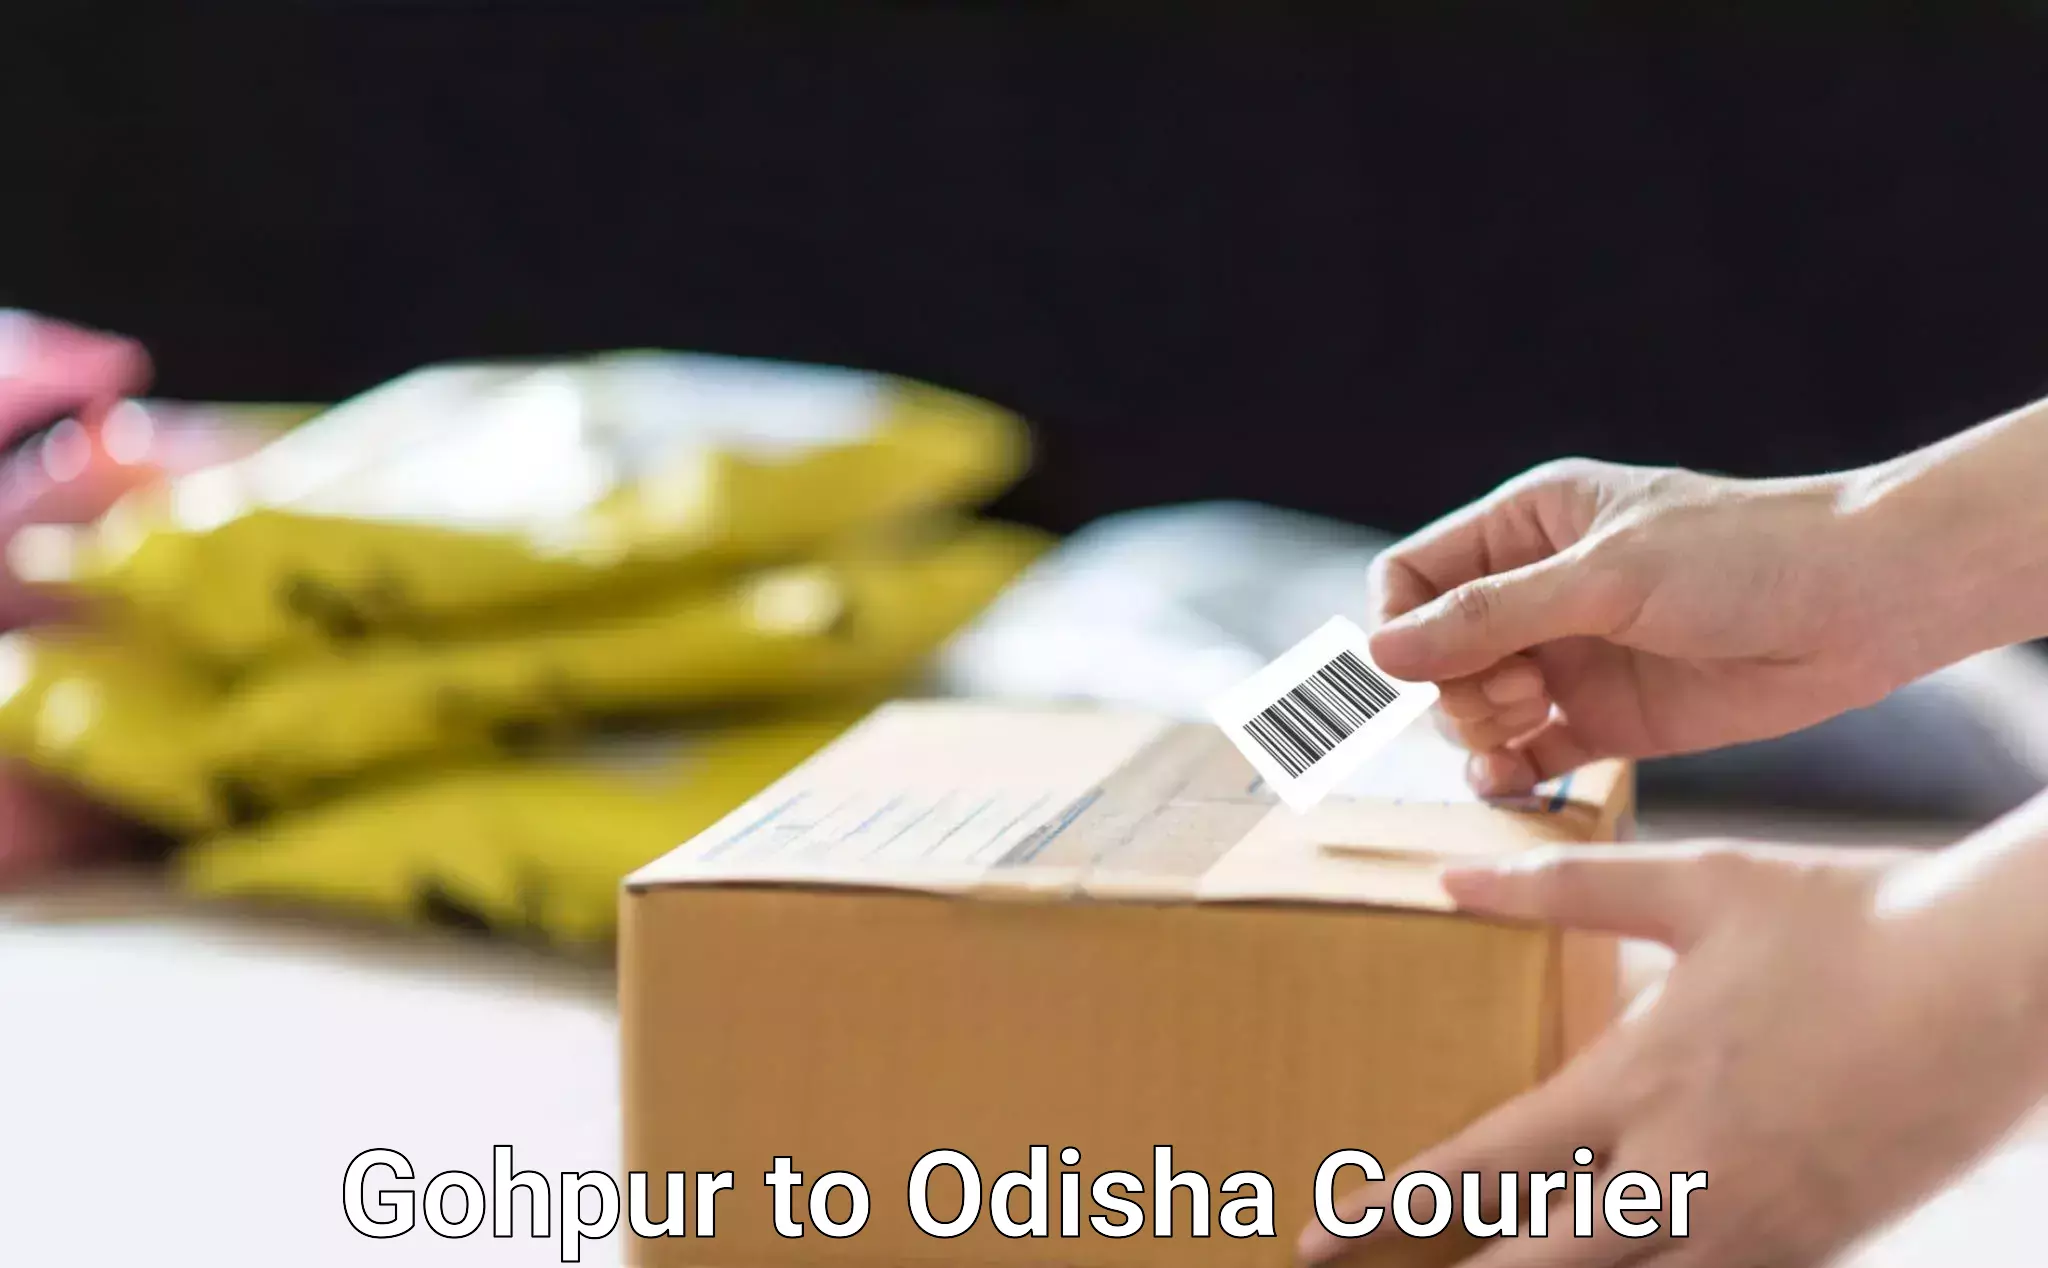 Optimized shipping routes Gohpur to Duburi